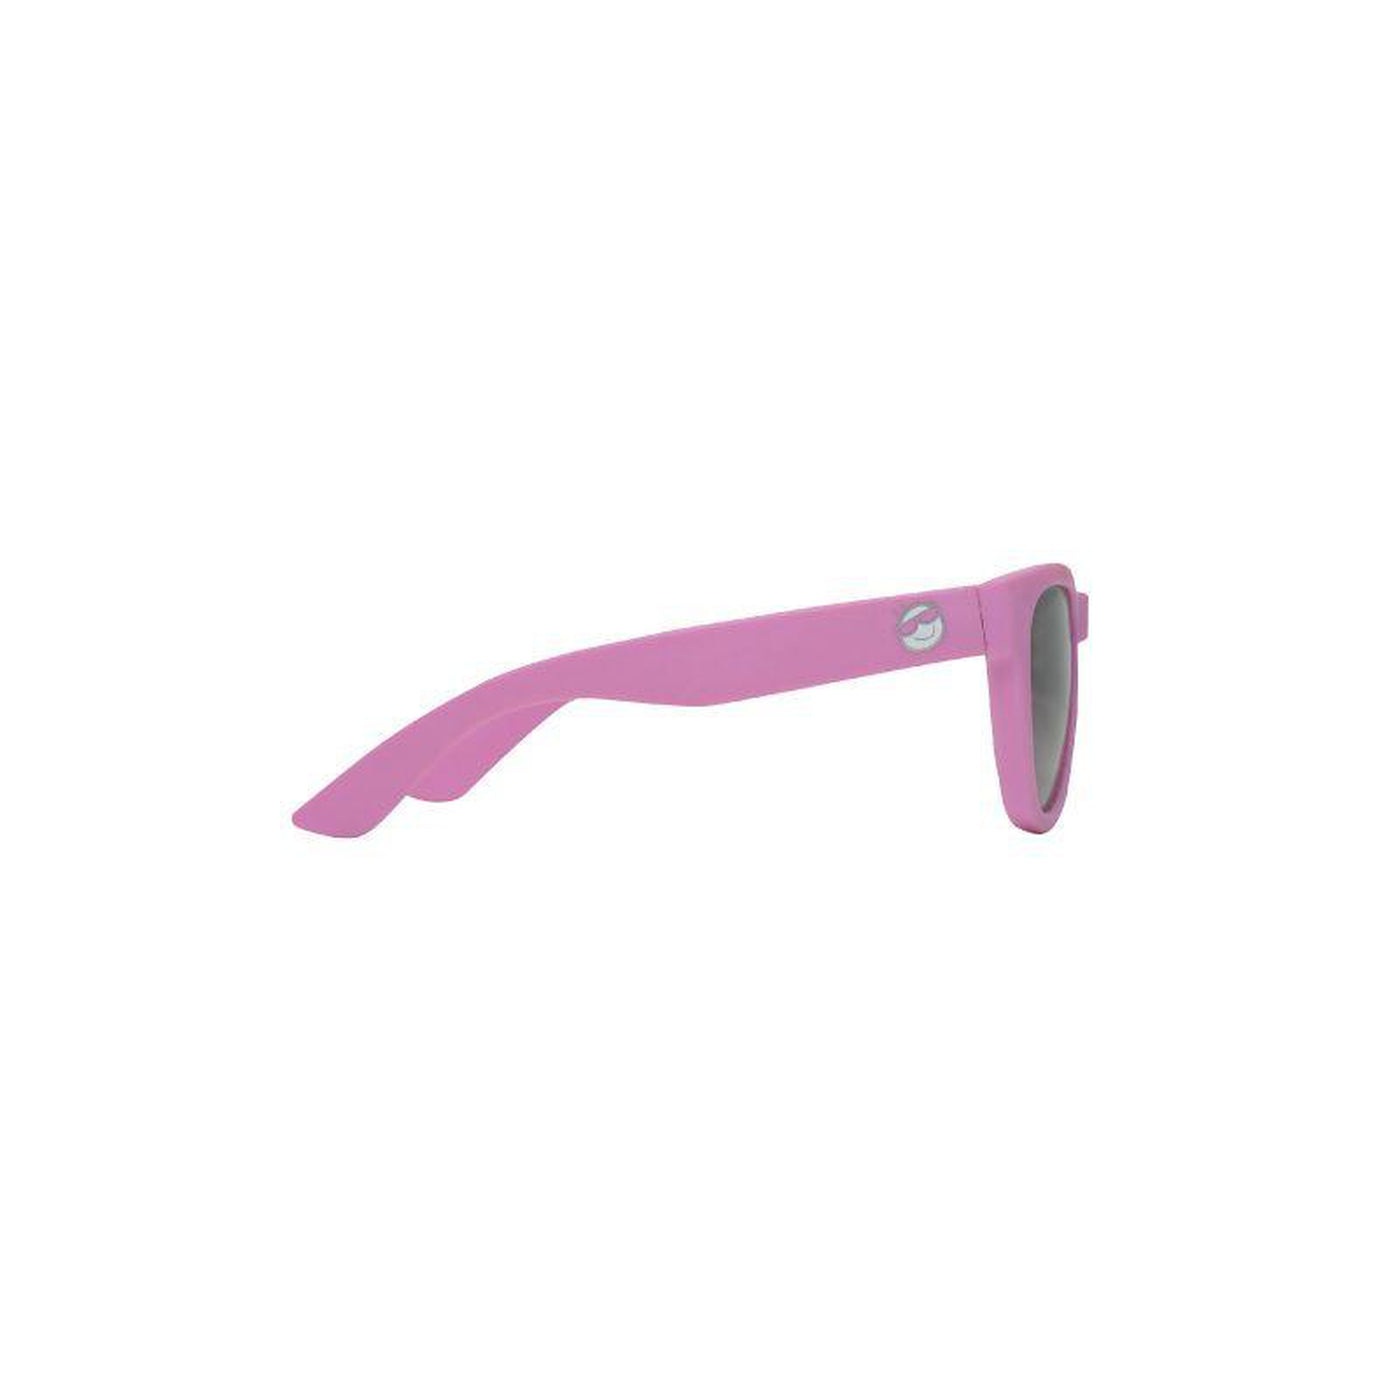 Ages 0-3-Sunglasses-Topline Eyewear